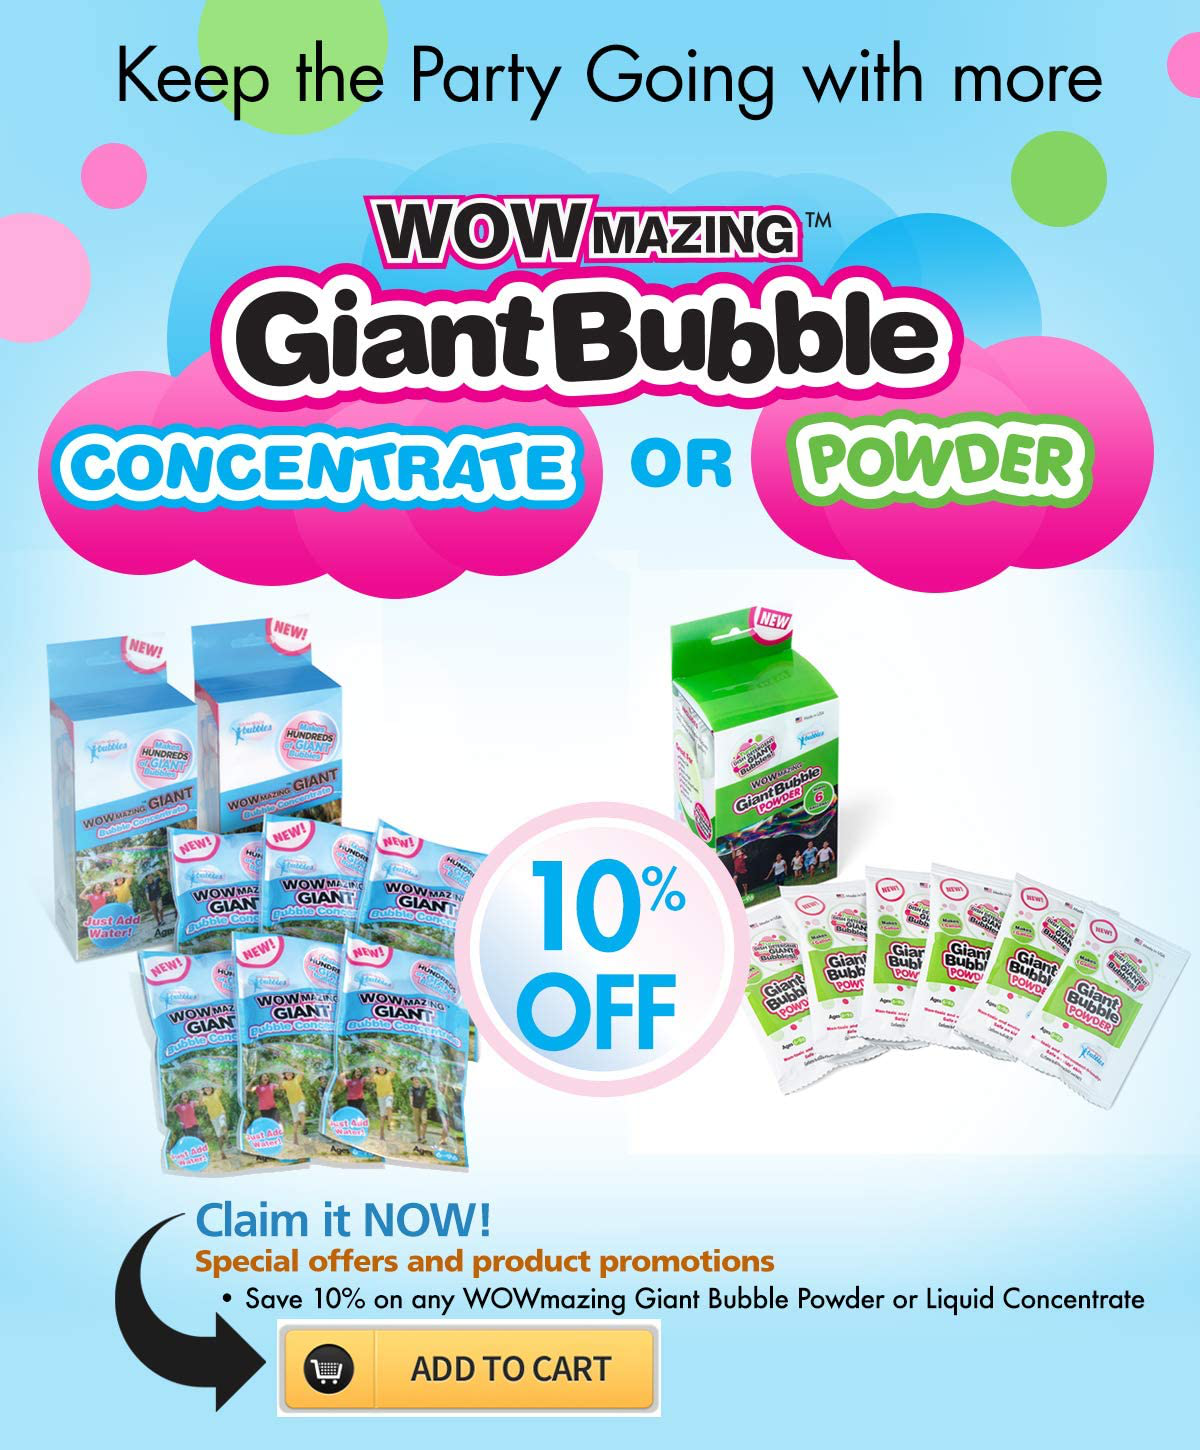 WOWMAZING Giant Bubble Kit: Kit Plus: (7-Piece Set) Great Value - Big Bubbles kit Including Big Bubble Wand and Giant Bubble Solution Concentrate. Makes 1.5 Gallon of Large Bubbles-Kit Plus